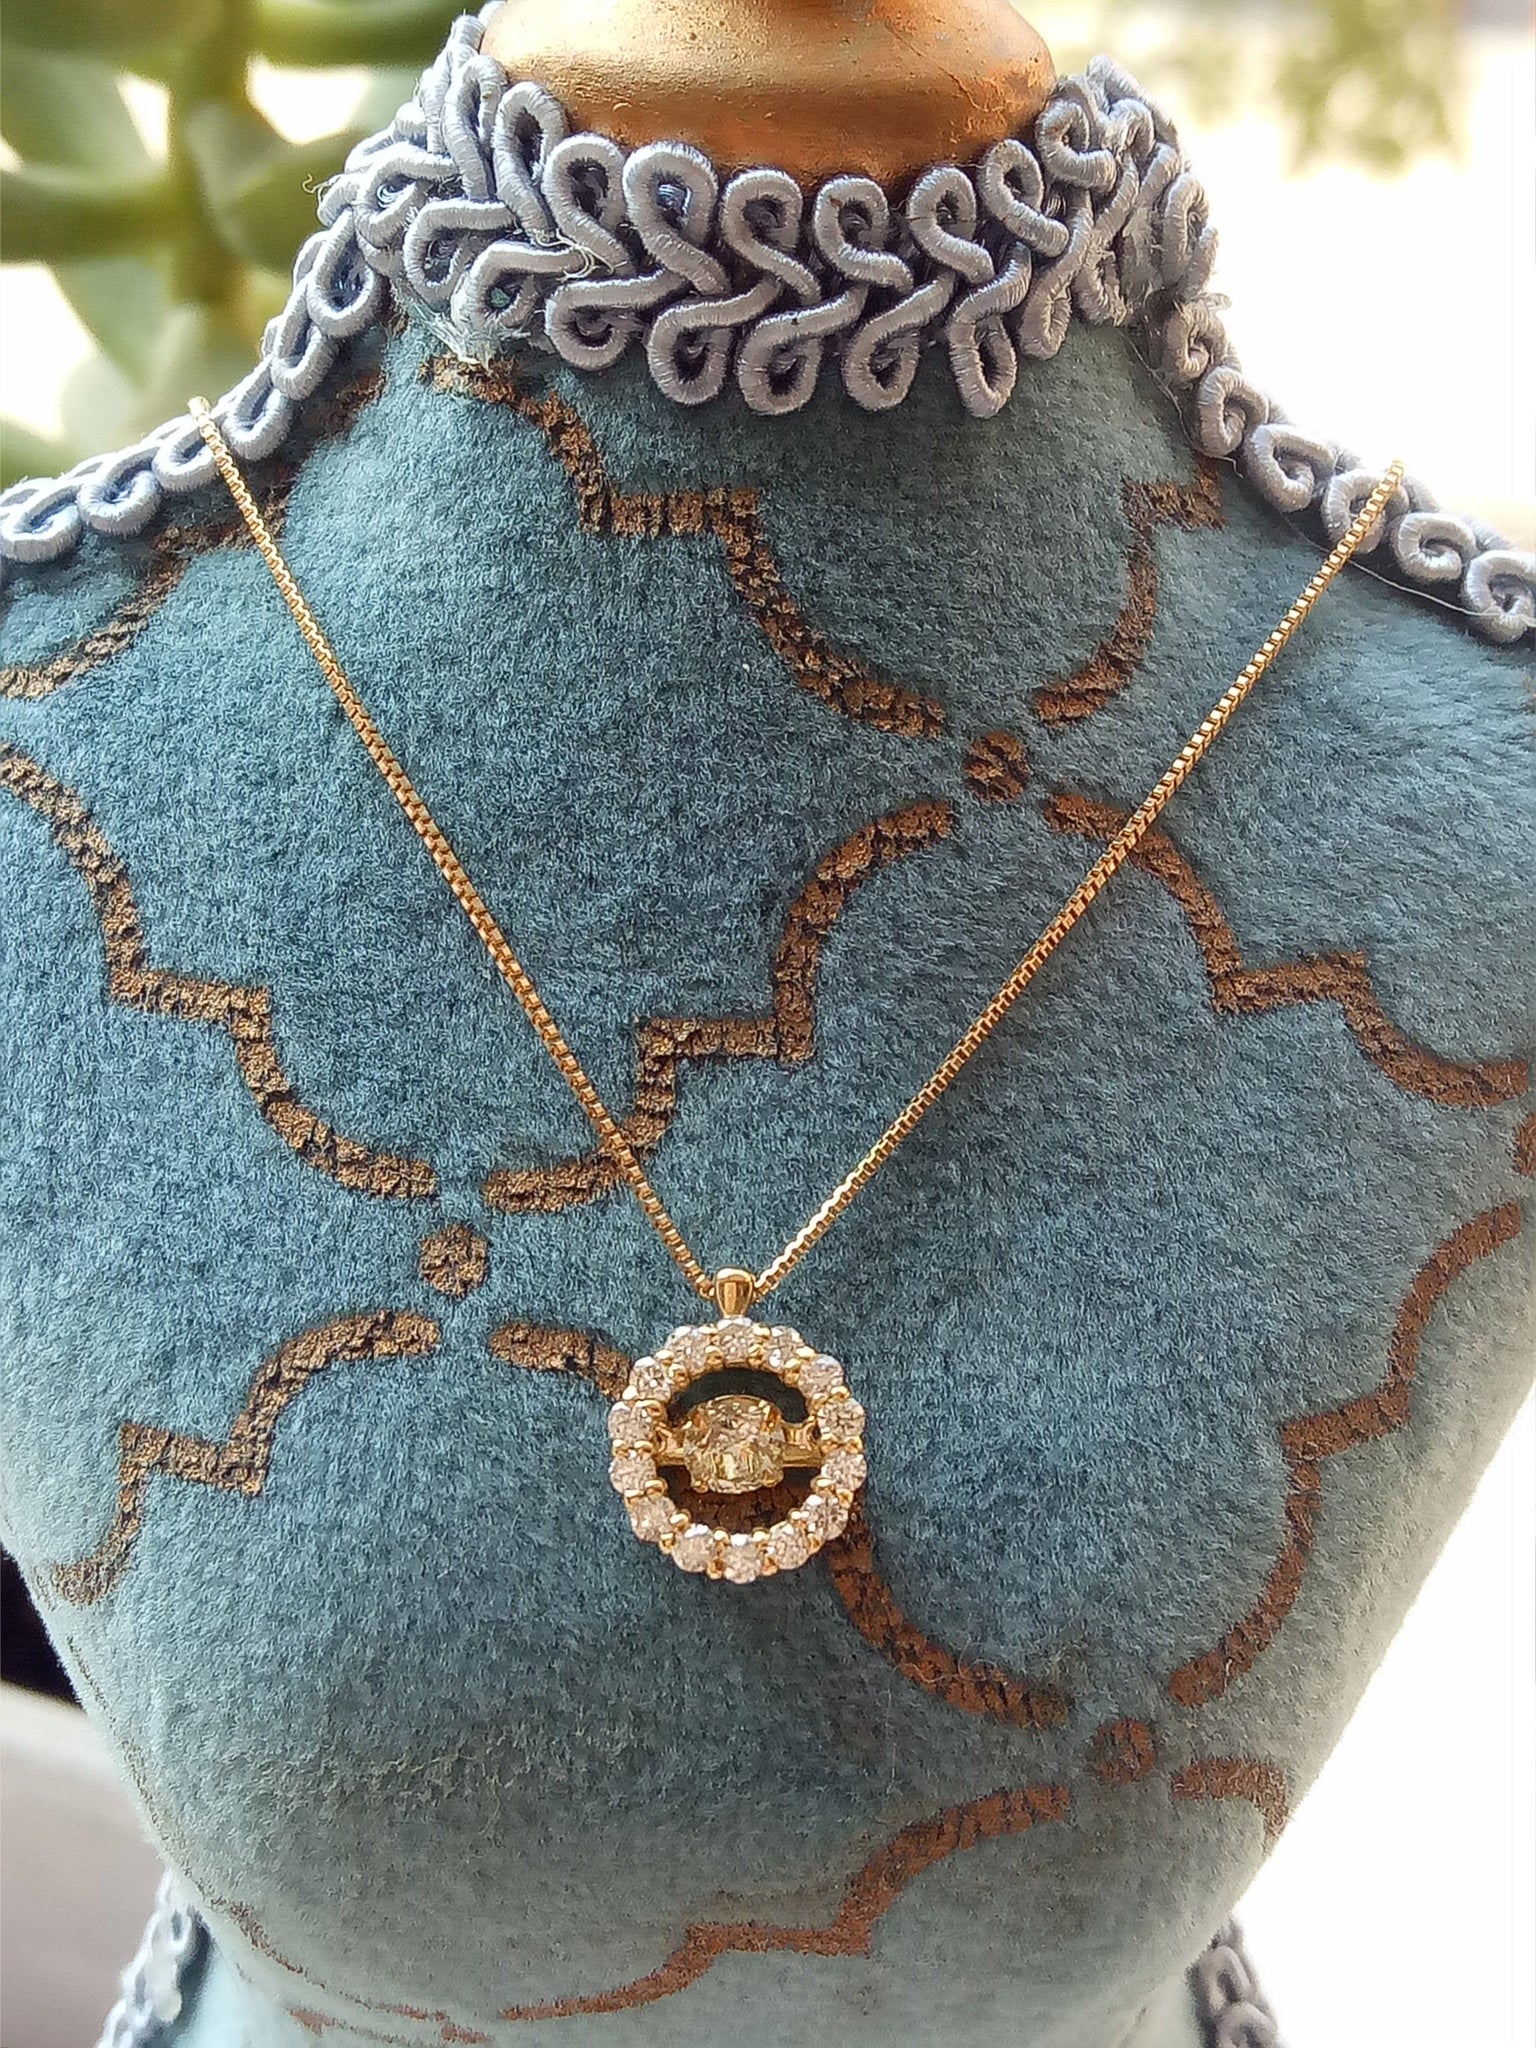 doveggs diamond pendant necklace 18k yellow gold center 0.18 carat diamond pendant necklace for women - DovEggs-Seattle